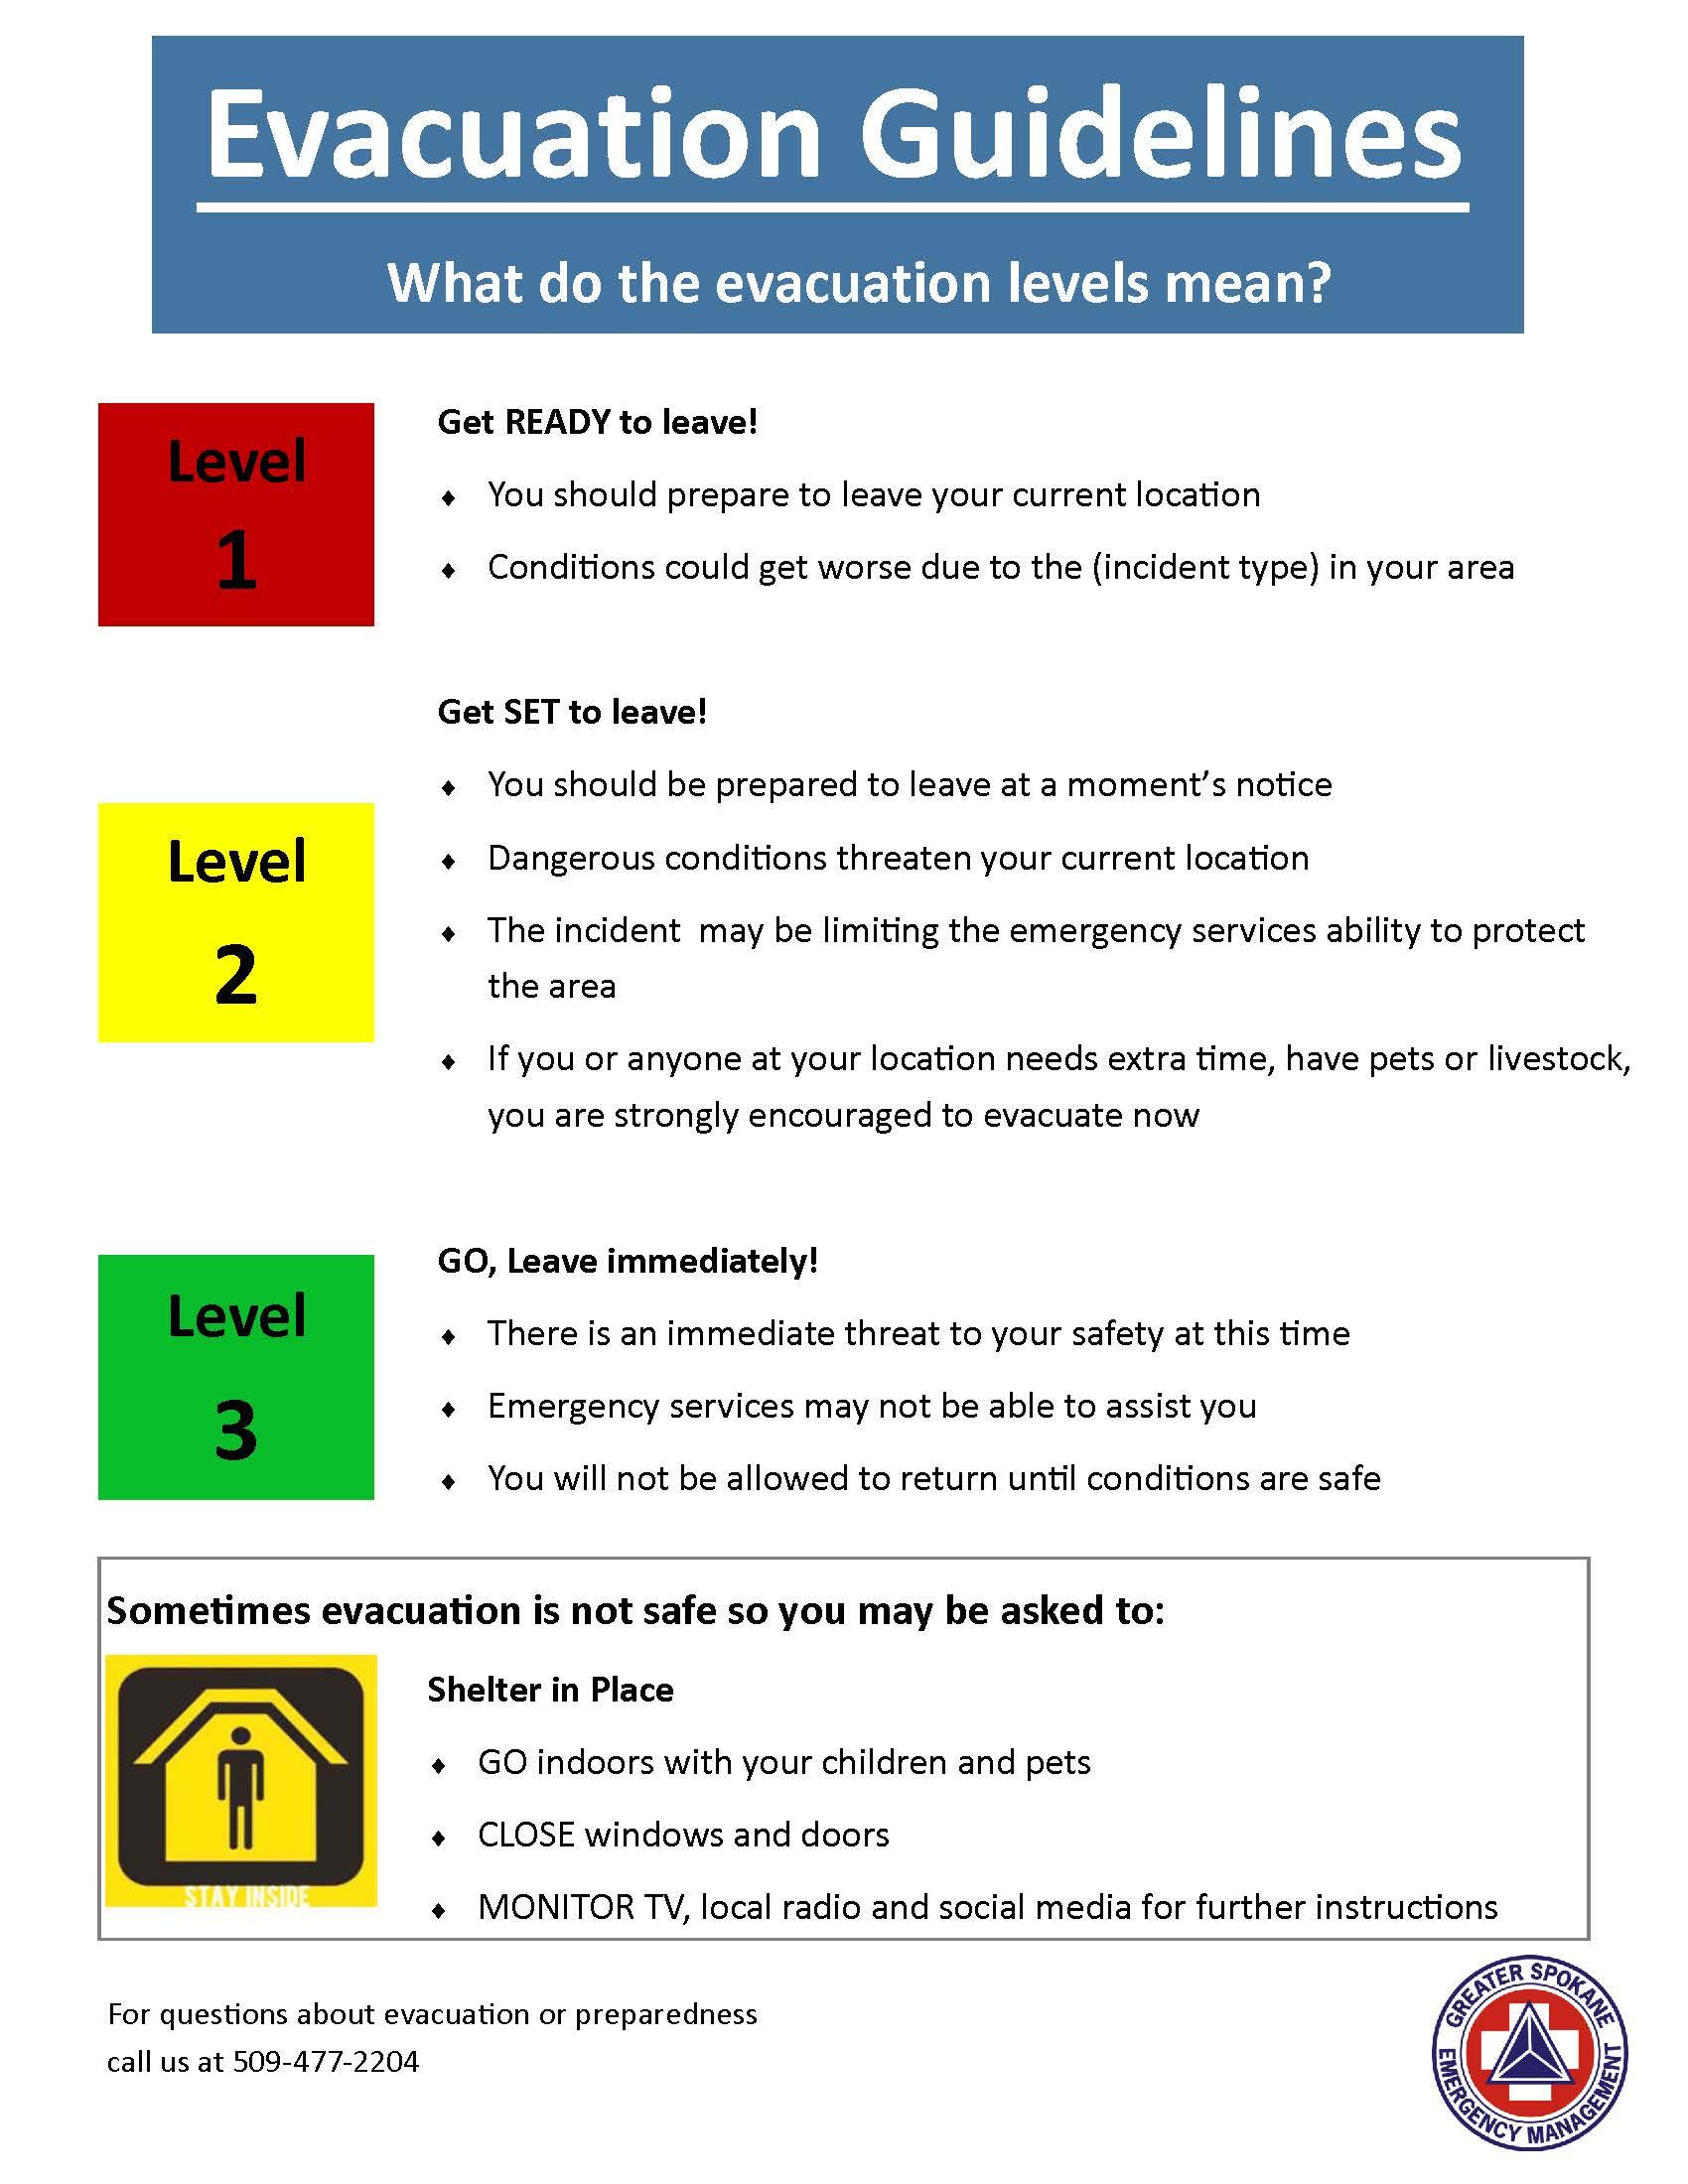 Explanation of the evacuation levels, Ready, Set, Go! 